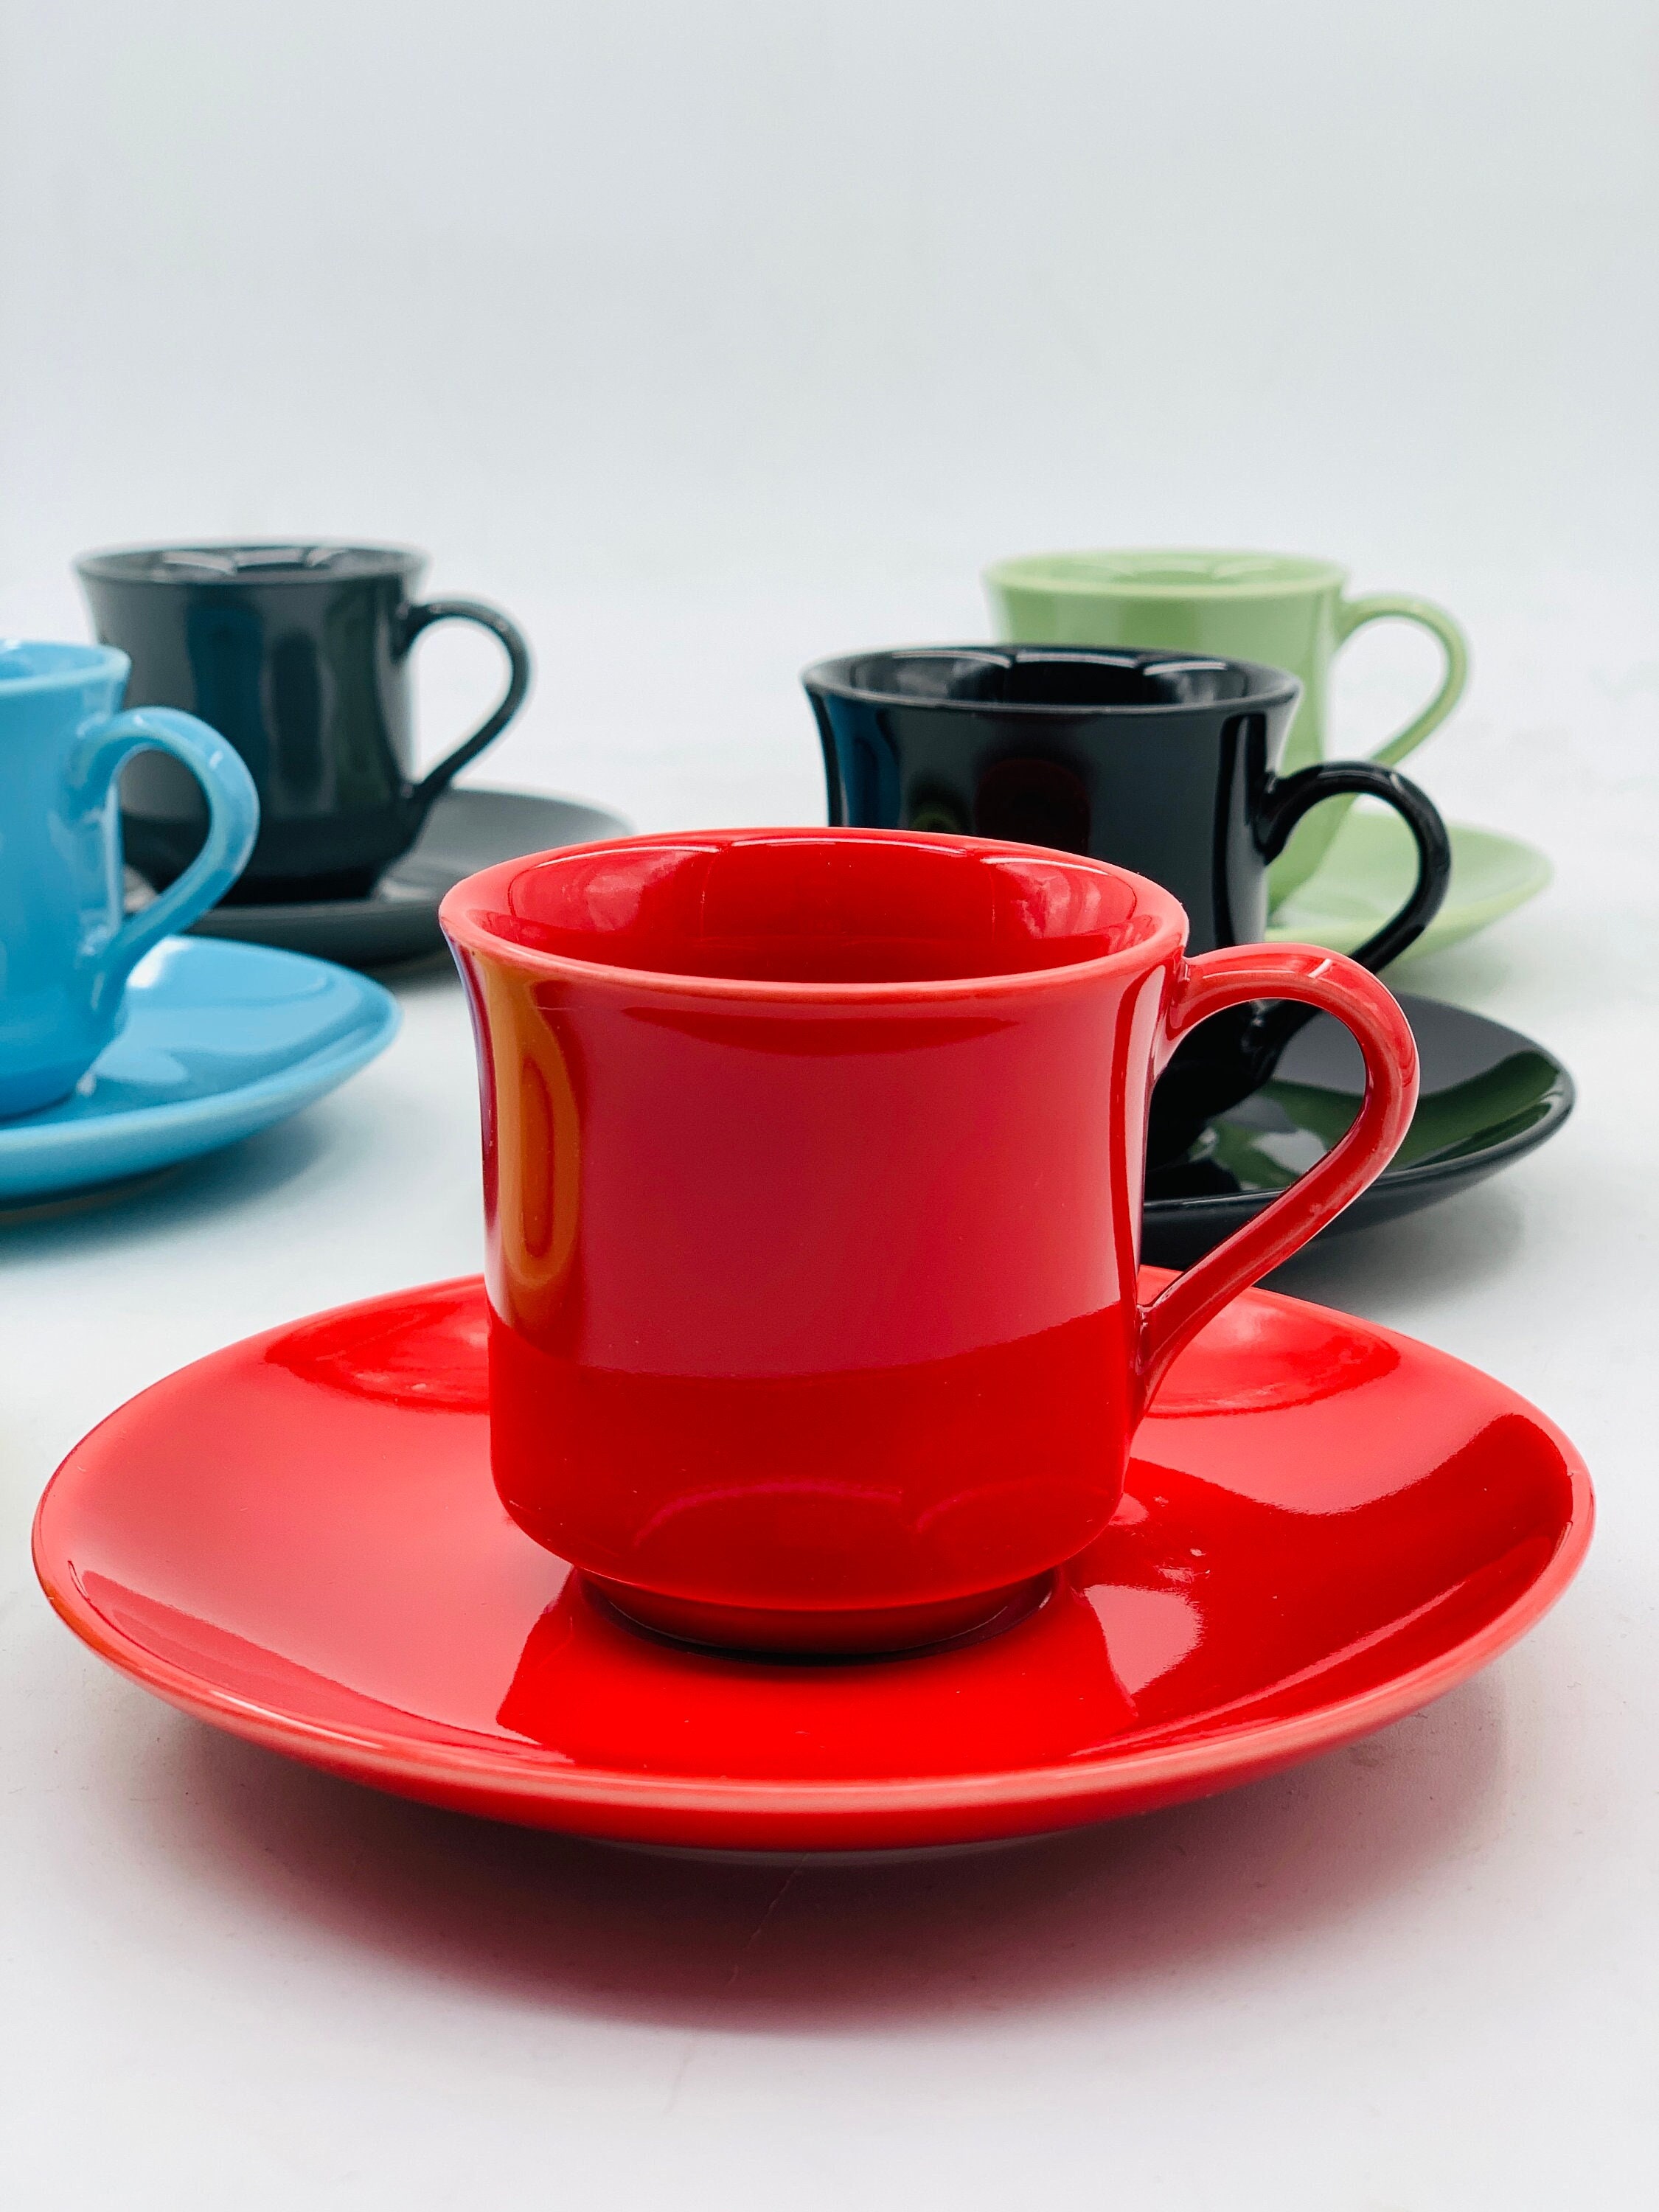 SooMILE 7oz Espresso Cups and Saucers Set Porcelain